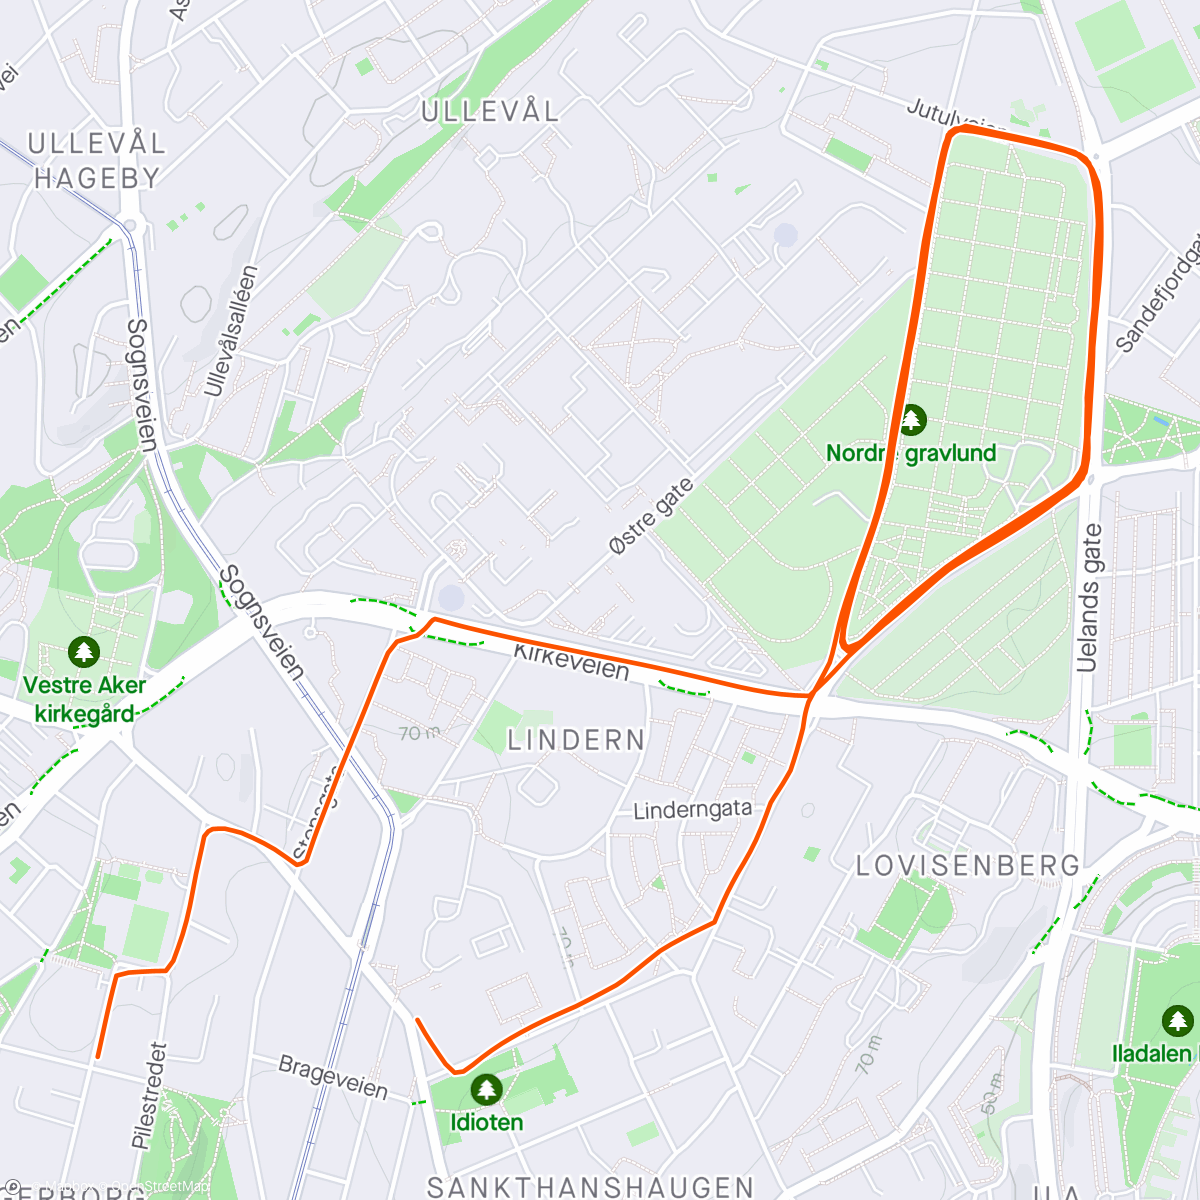 Map of the activity, NG 4x7min 90sek joggepause.